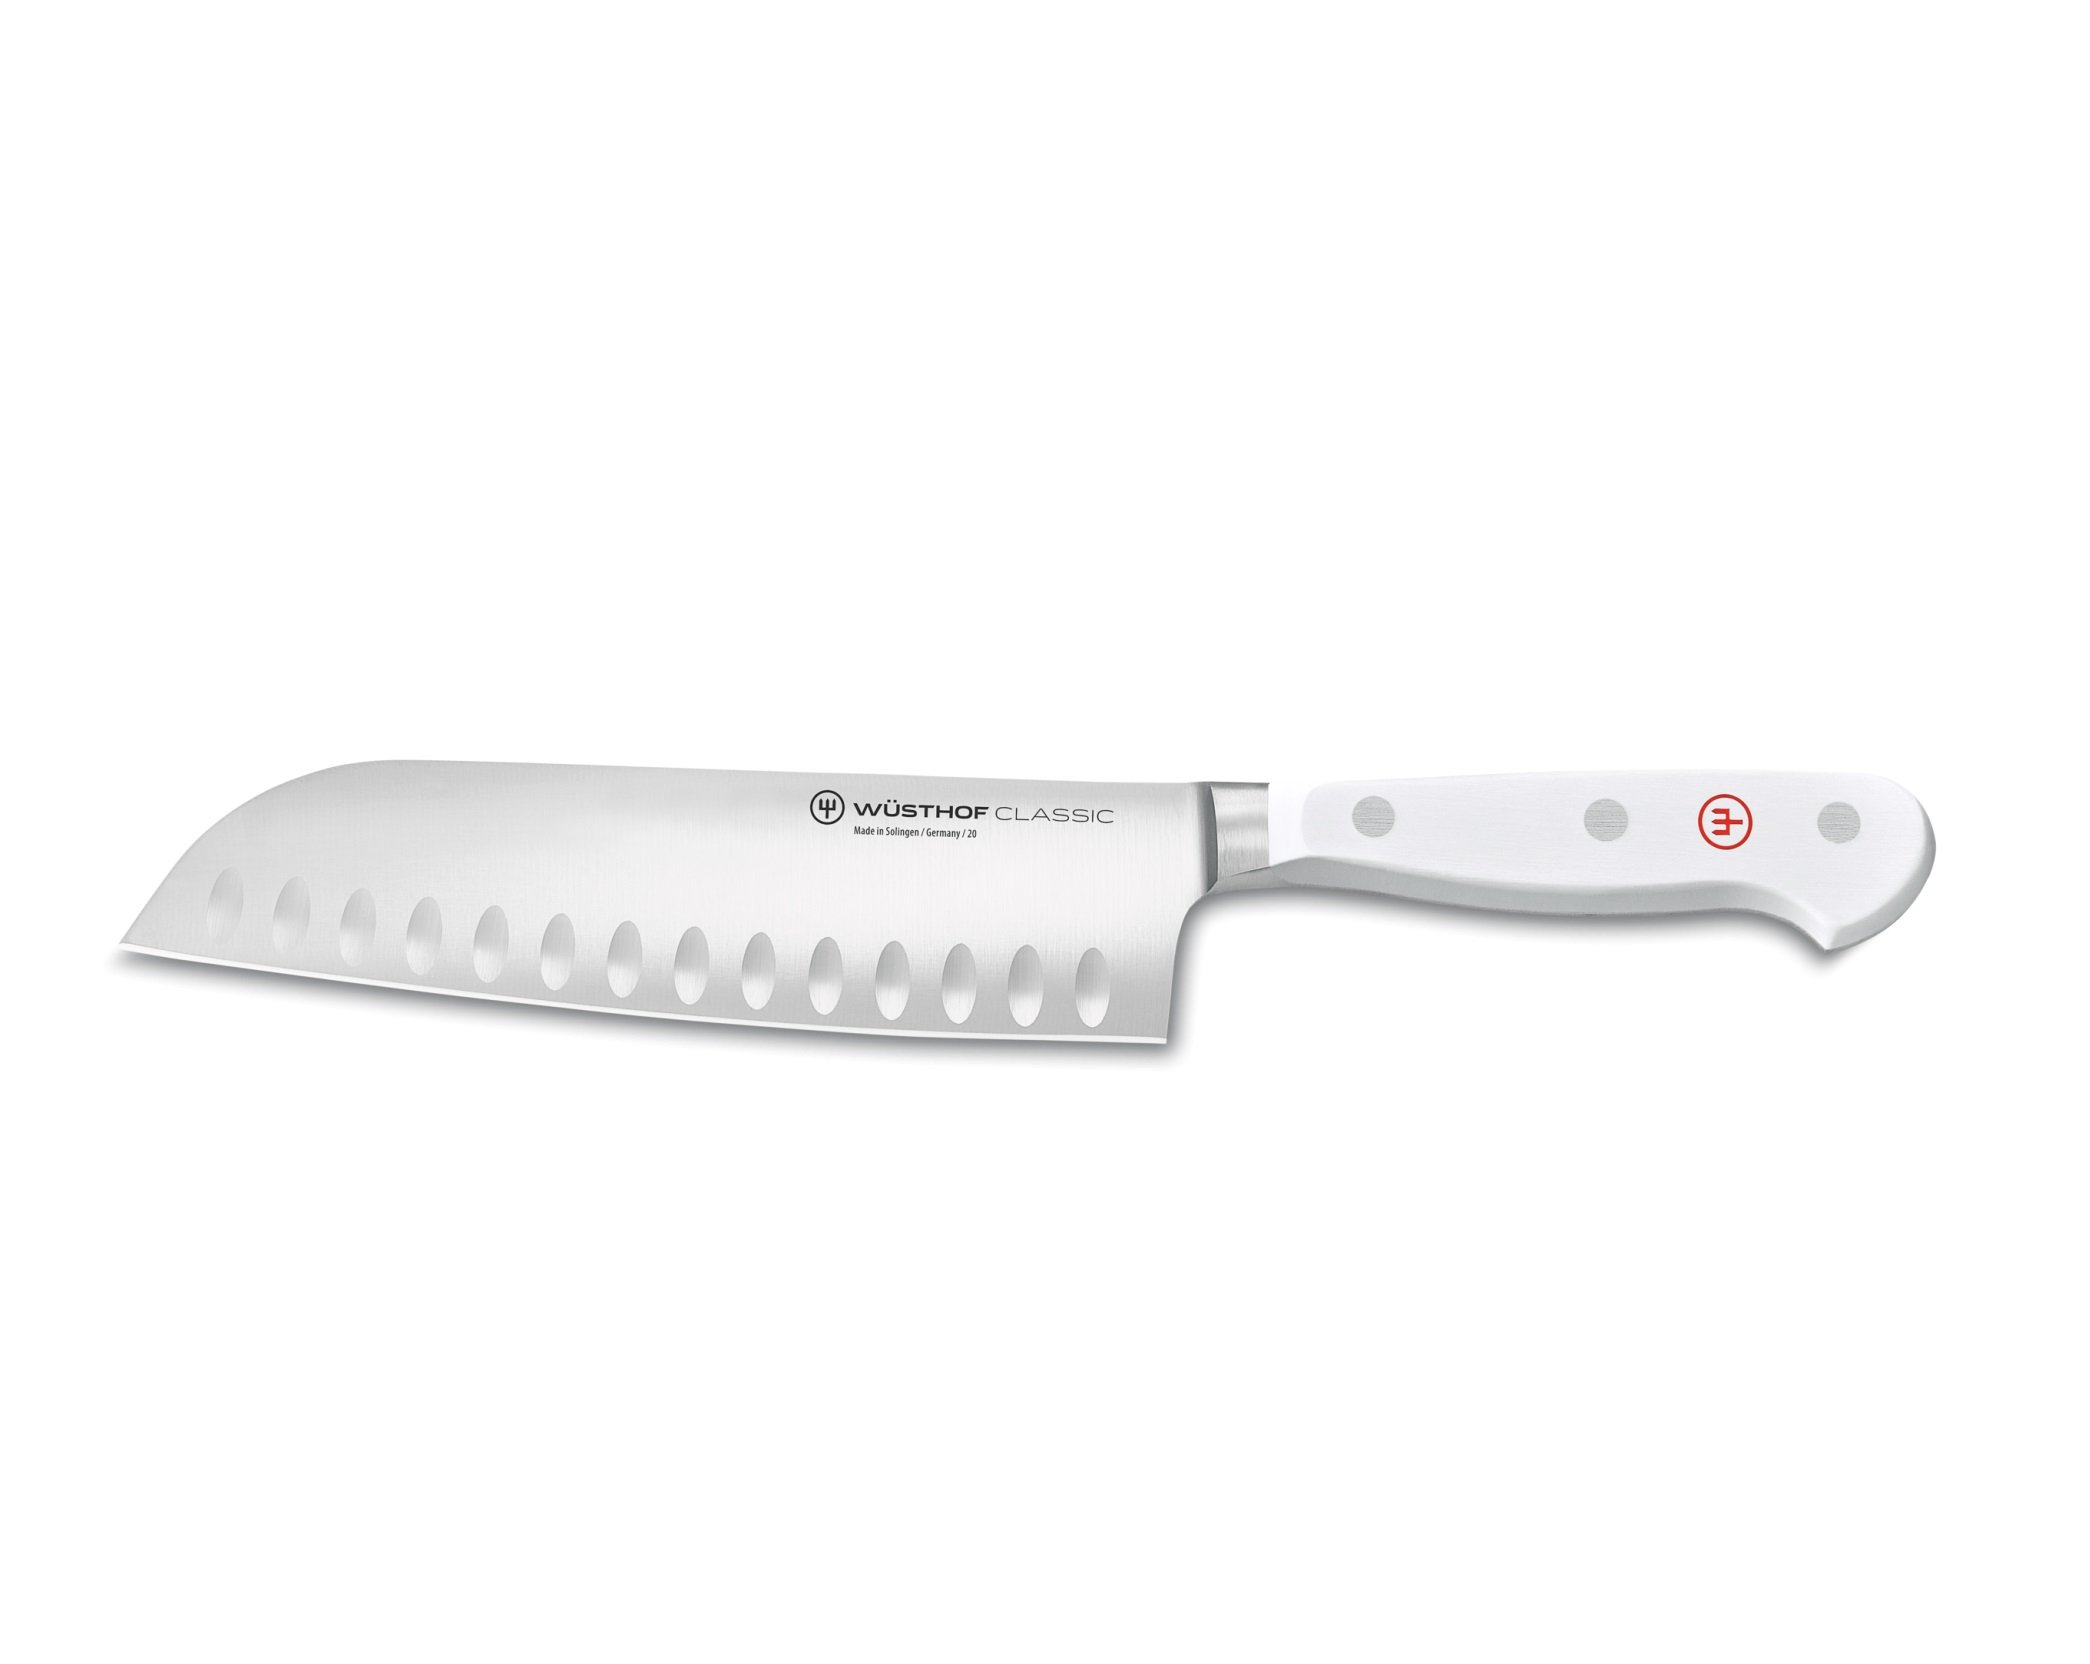 Блок с ножами, заточкой и ножницами кухонными Wuesthof Classic White, 7 предметов (1090270601) - фото 4